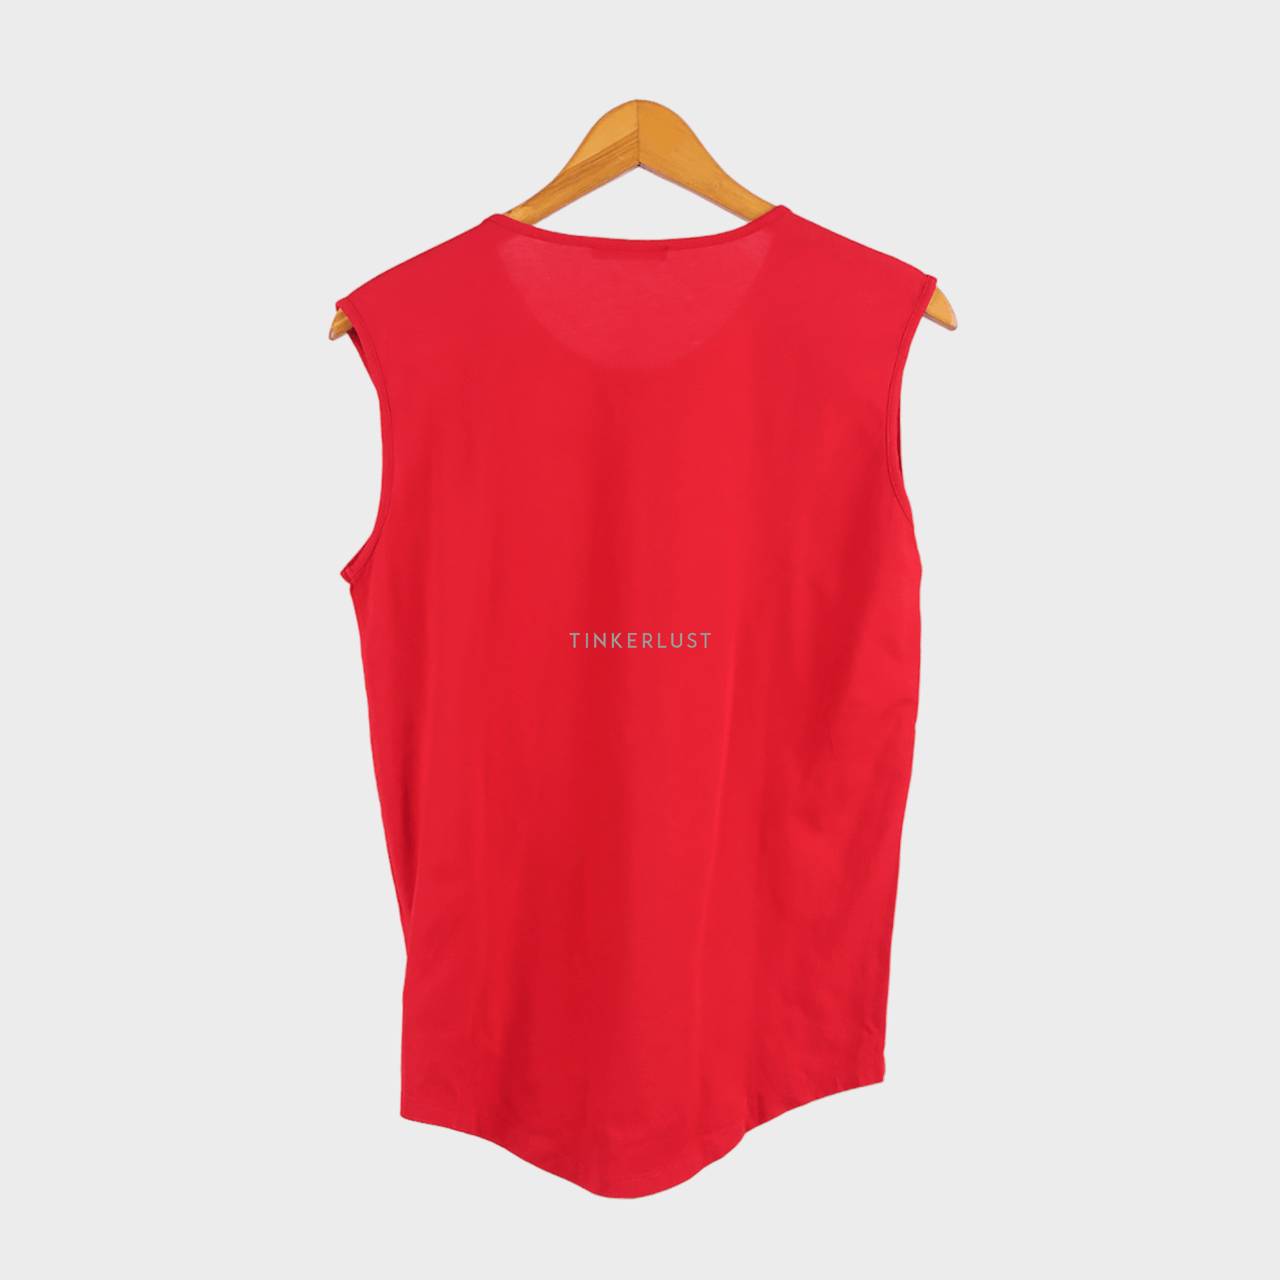 Balmain Red Logo Printed Cotton Shoulder Button Detail Sleeveless T-Shirt 